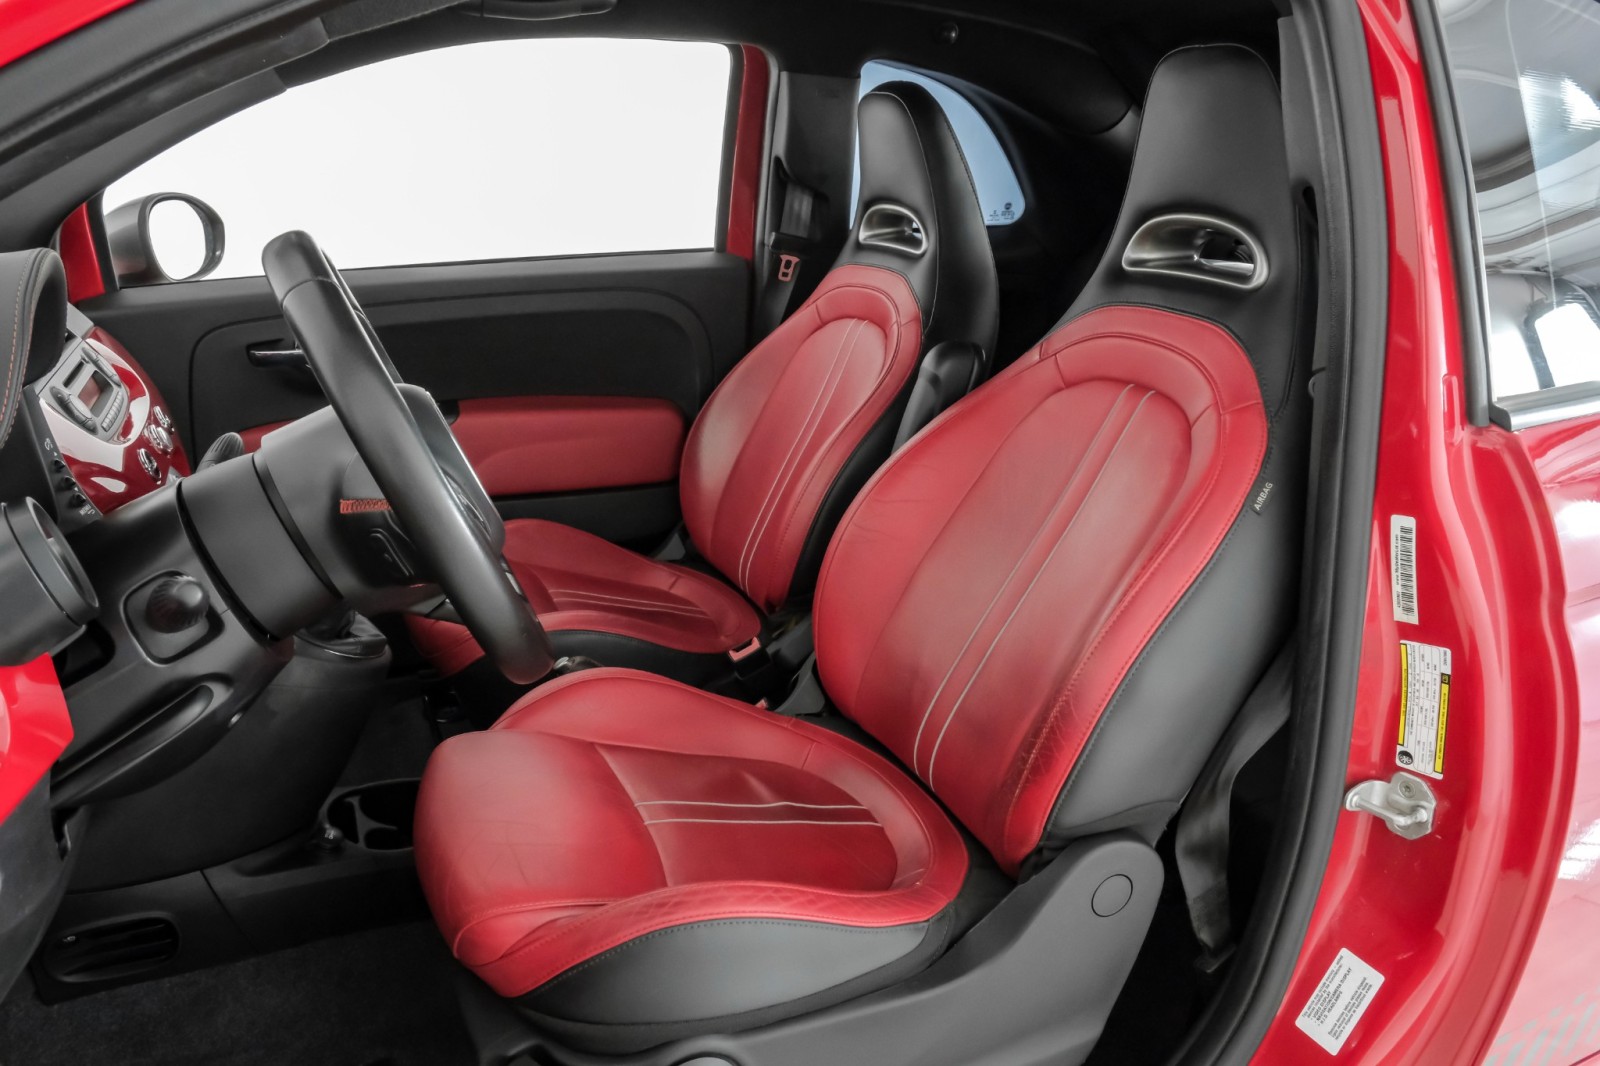 2013 FIAT 500 Convertible ABARTH LEATHER HEATED SEATS BEATS AUDIO REAR PARKI 4